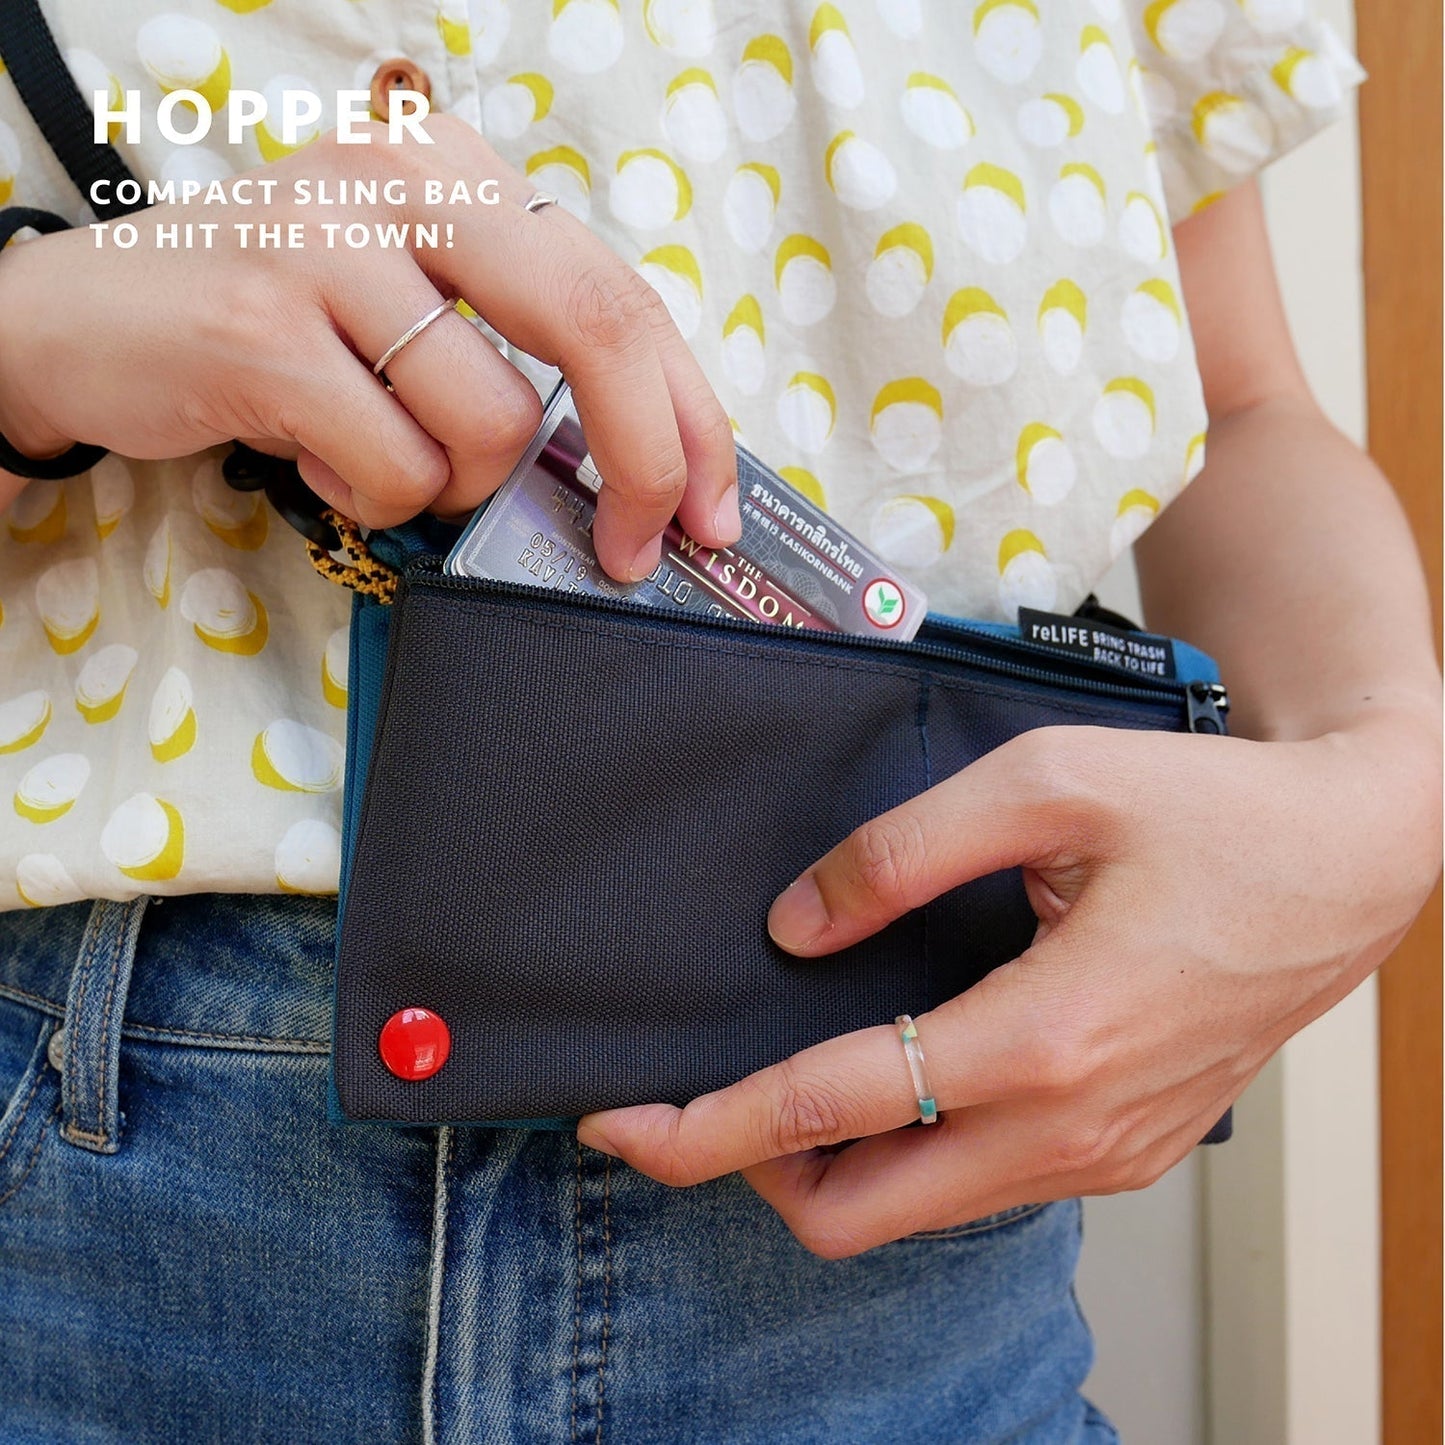 Hopper relife mint sling bag